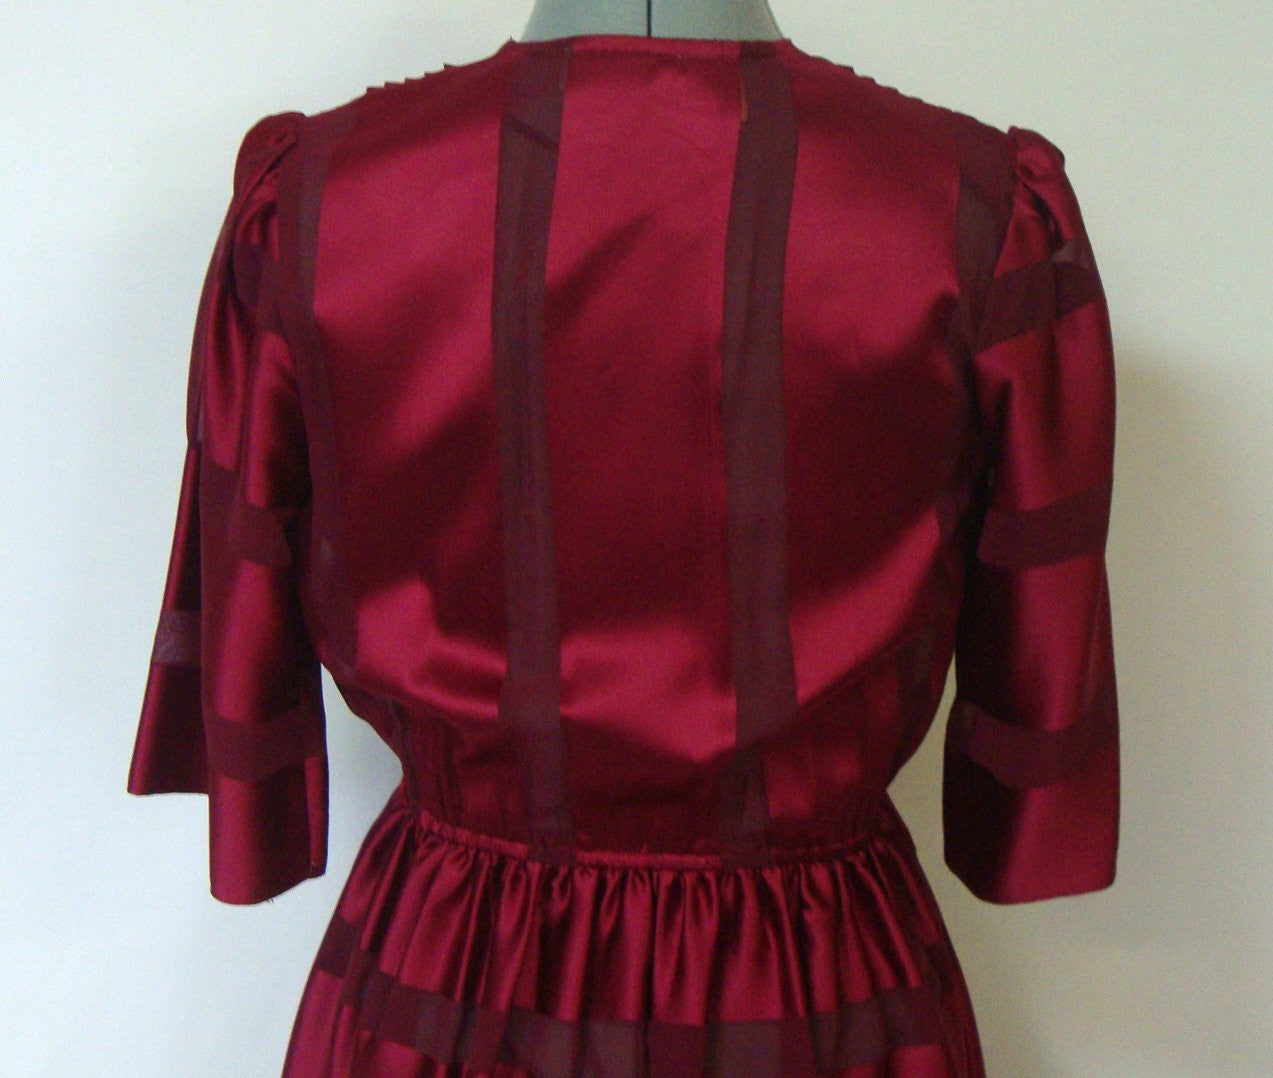 Vintage SWEET TALK RED BURGUNDY SILK STRIPED SHEER FULL SKIRT COCKTAIL DRESS SMALL 5 6 Abby Essie